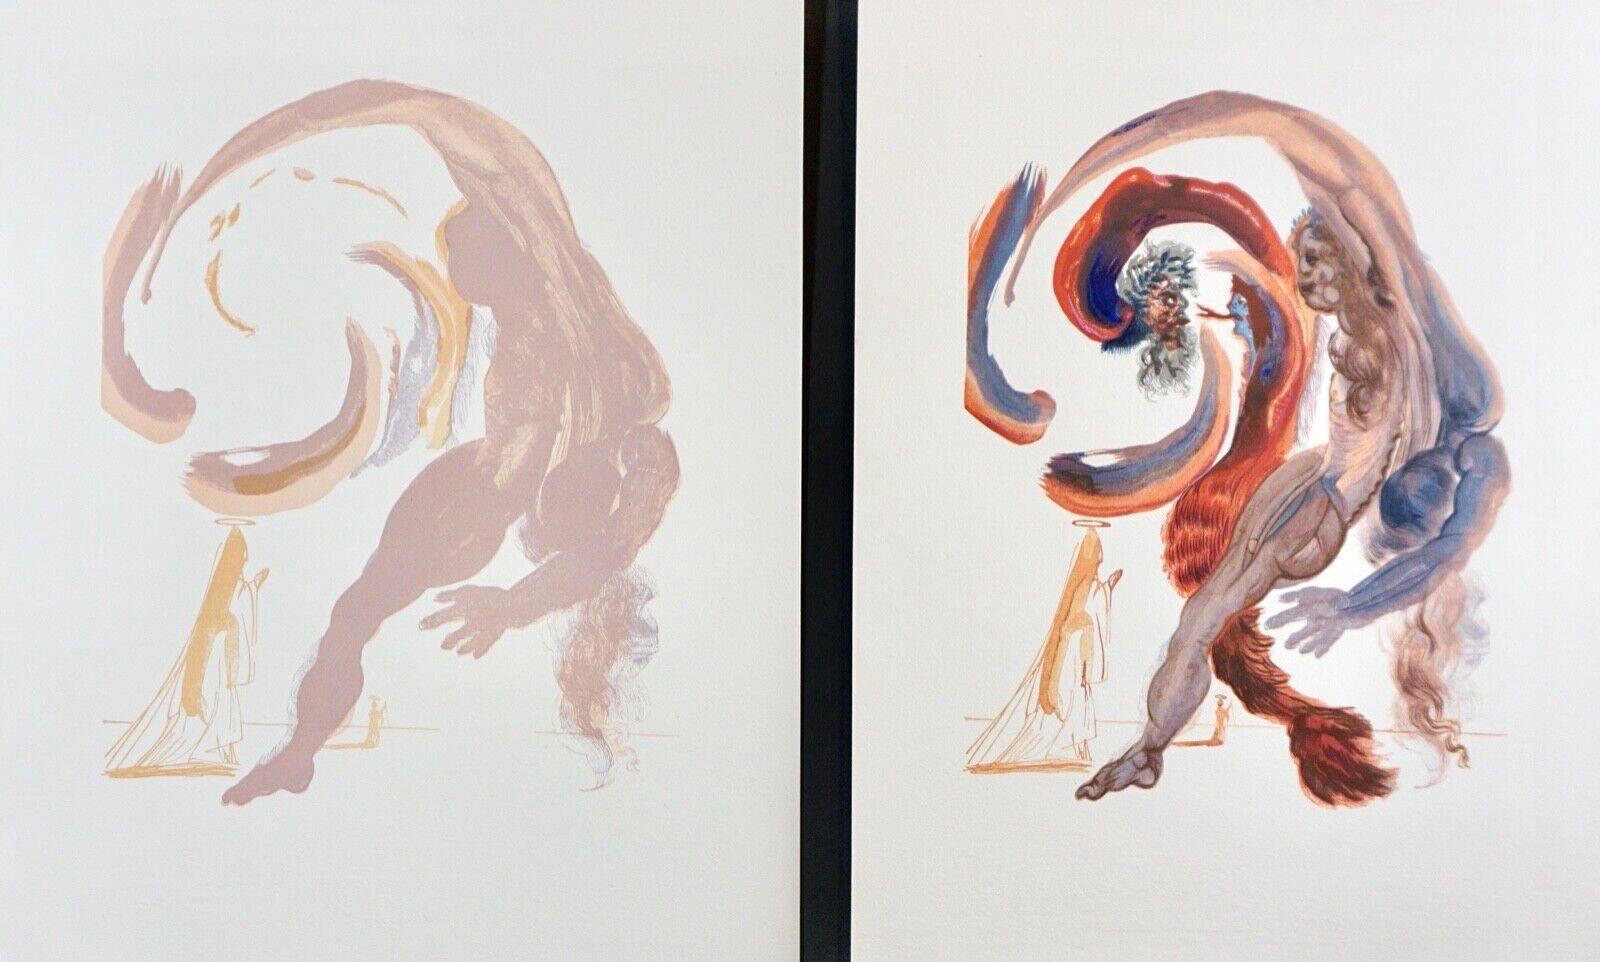 Salvador Dalí Abstract Print – Göttliche Komödie Fegefeuer Canto 18 Dekomposition (2 Pieces)